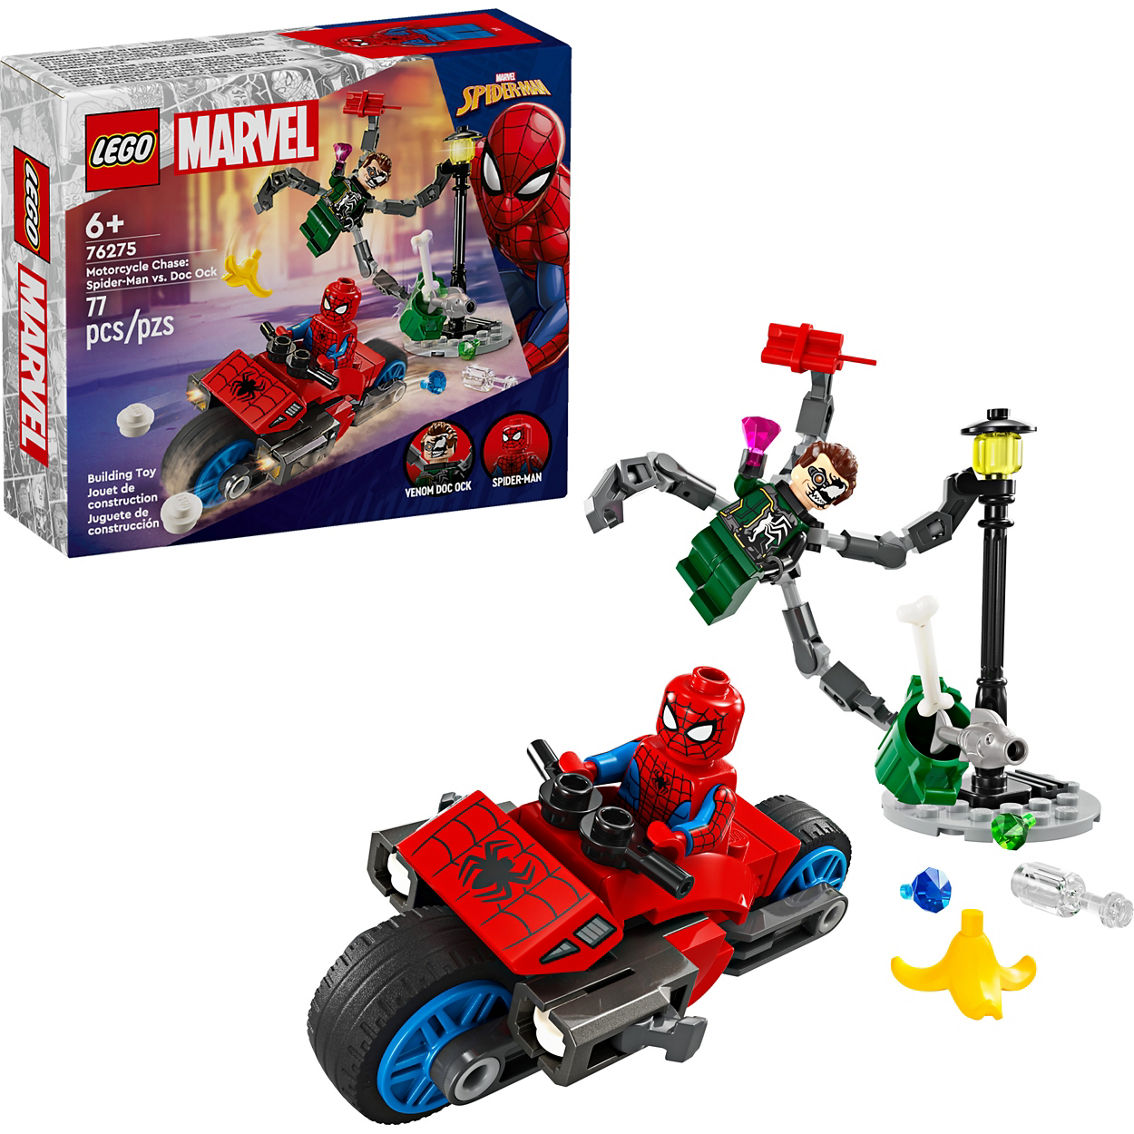 LEGO Marvel Motorcycle Chase Spider-Man vs. Doc Ock 76275 - Image 4 of 7